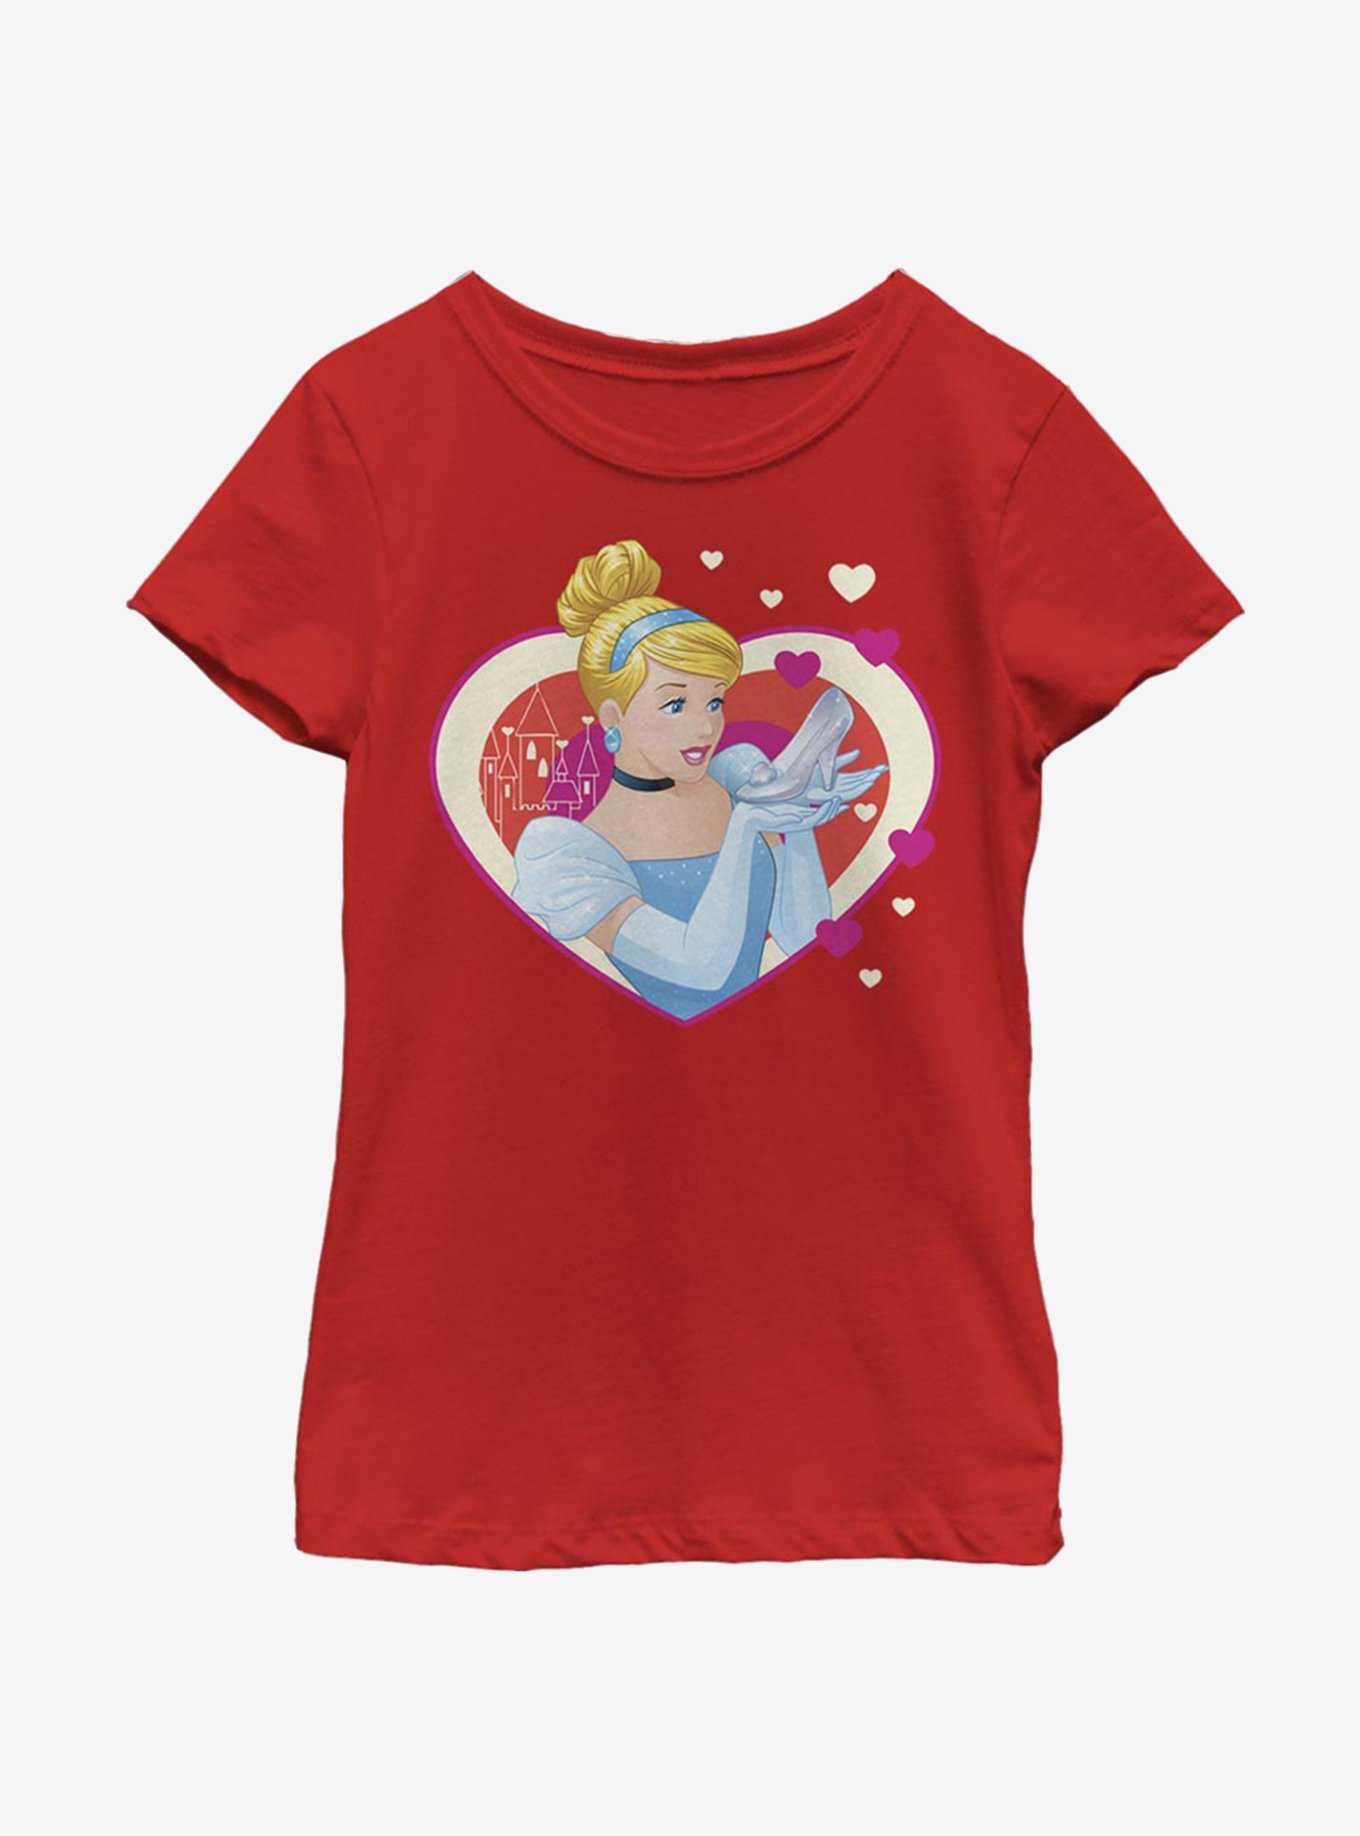 Disney Cinderella The Shoe Fits Youth Girls T-Shirt, , hi-res